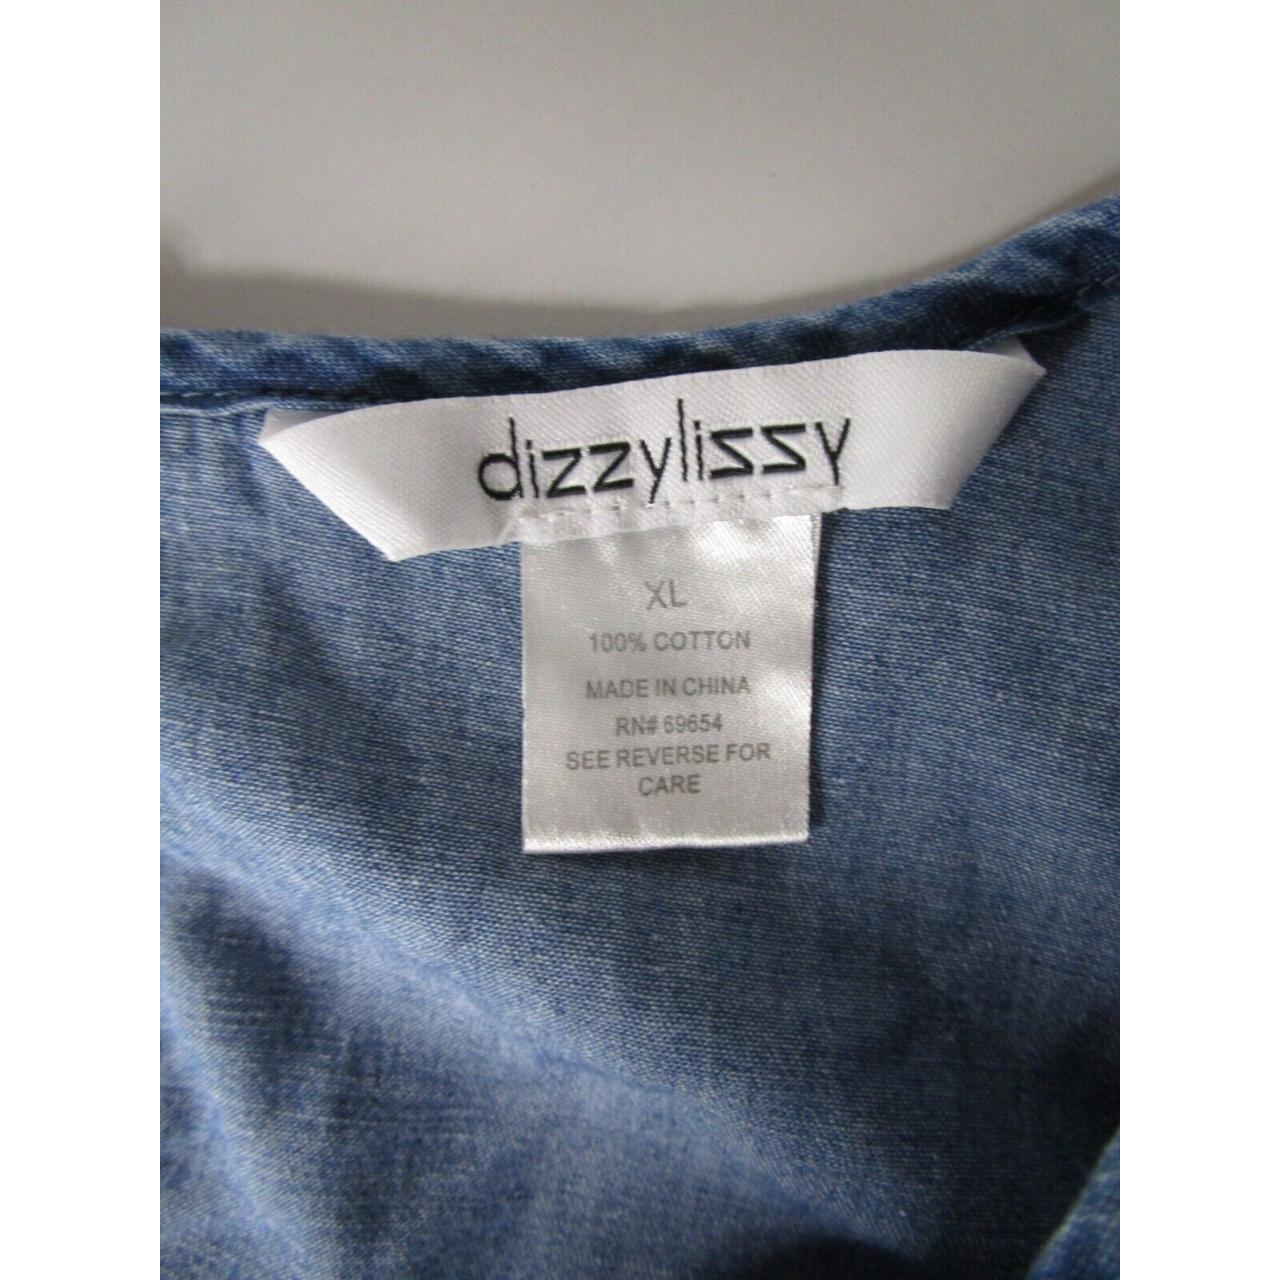 Product Image 4 - Dizzy Lizzy Blouse Women XL